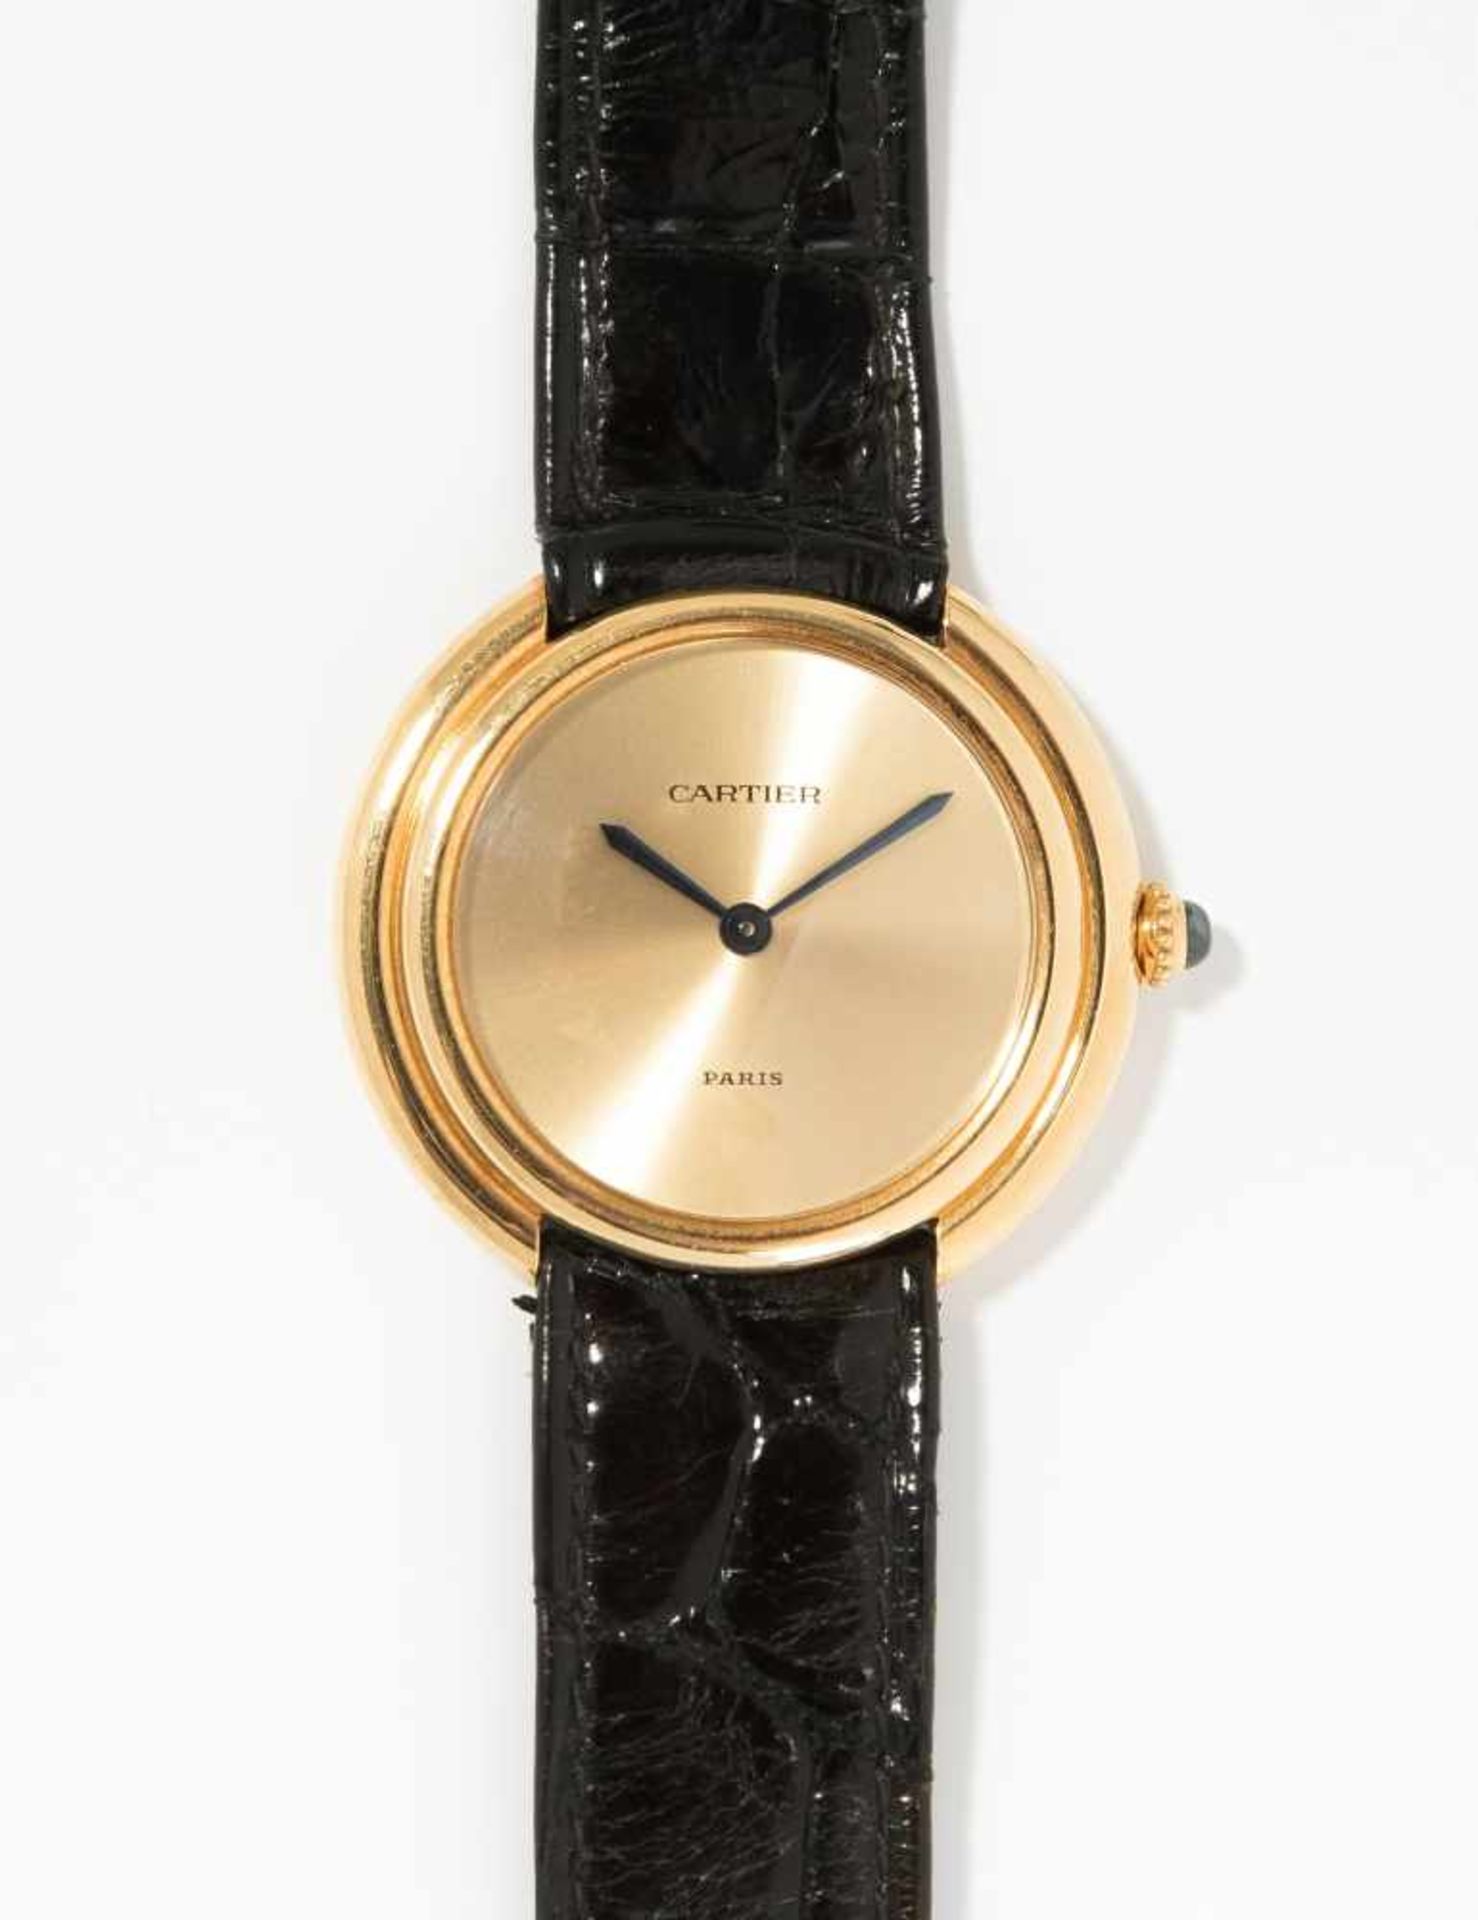 Cartier Herrenarmbanduhr Paris, 1980er Jahre. Modell Vendôme. Handaufzug. Nr. 090875407. 750